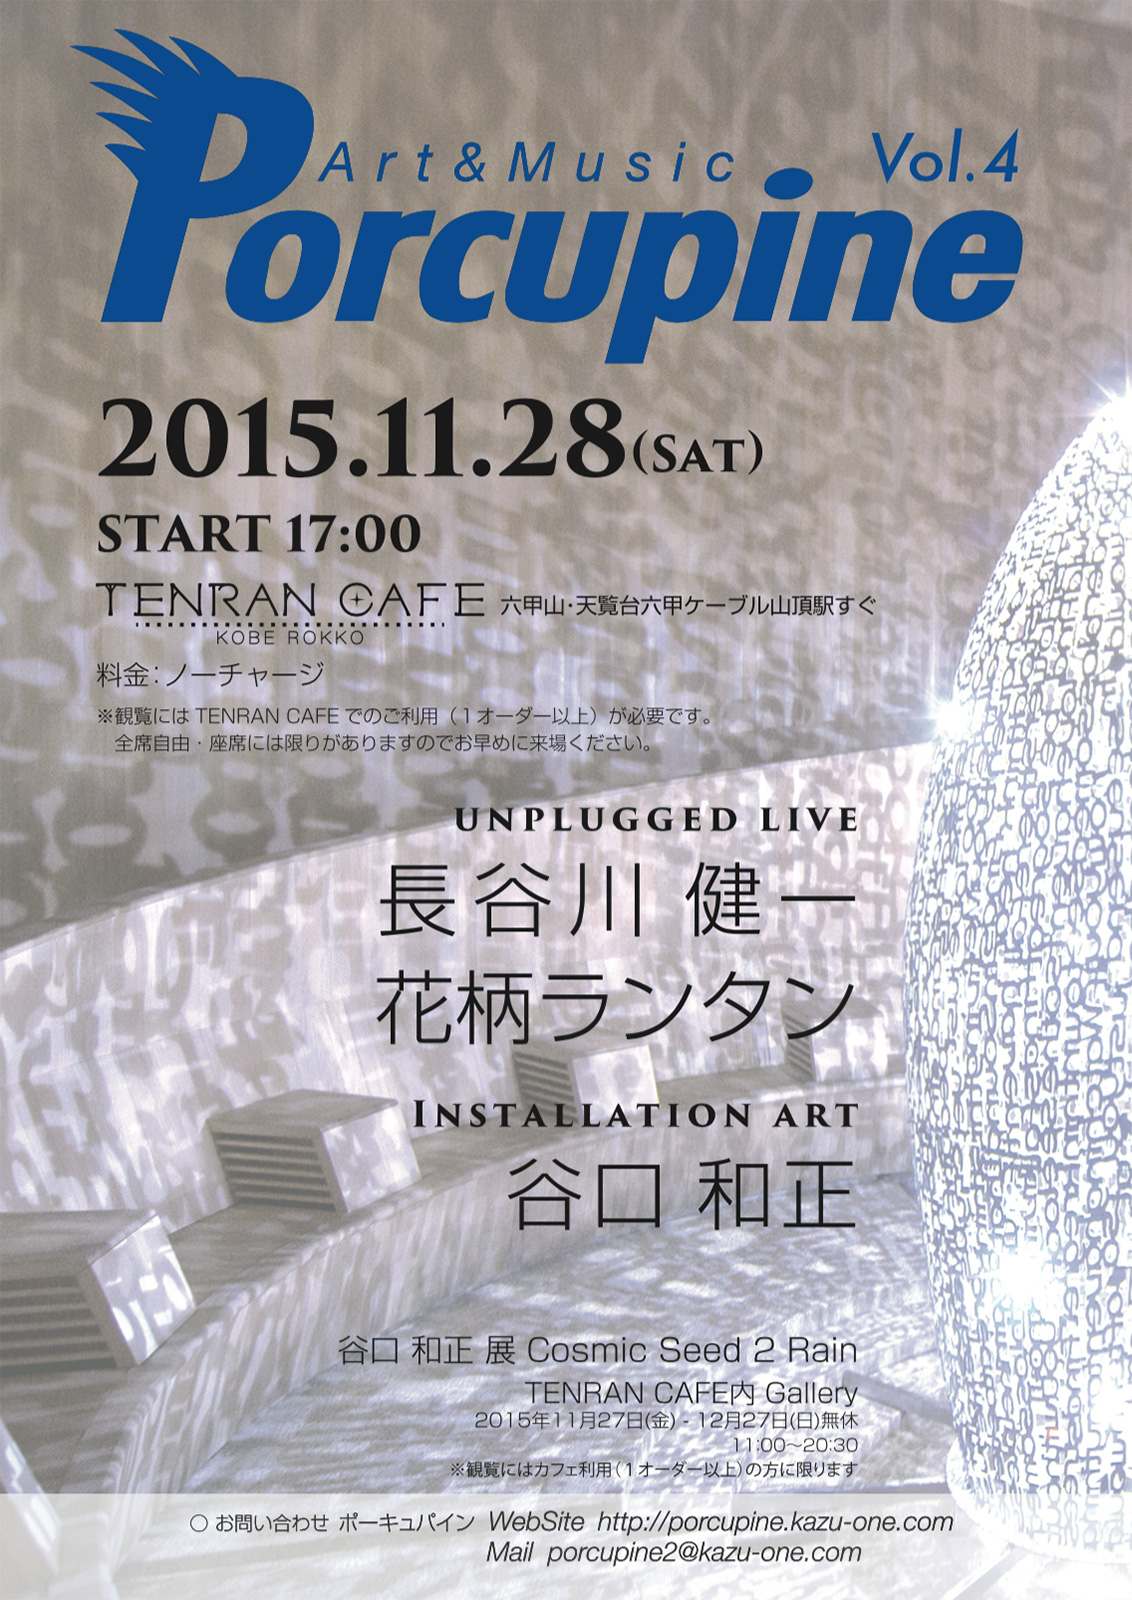 Art & Music Porcupine Vol.4